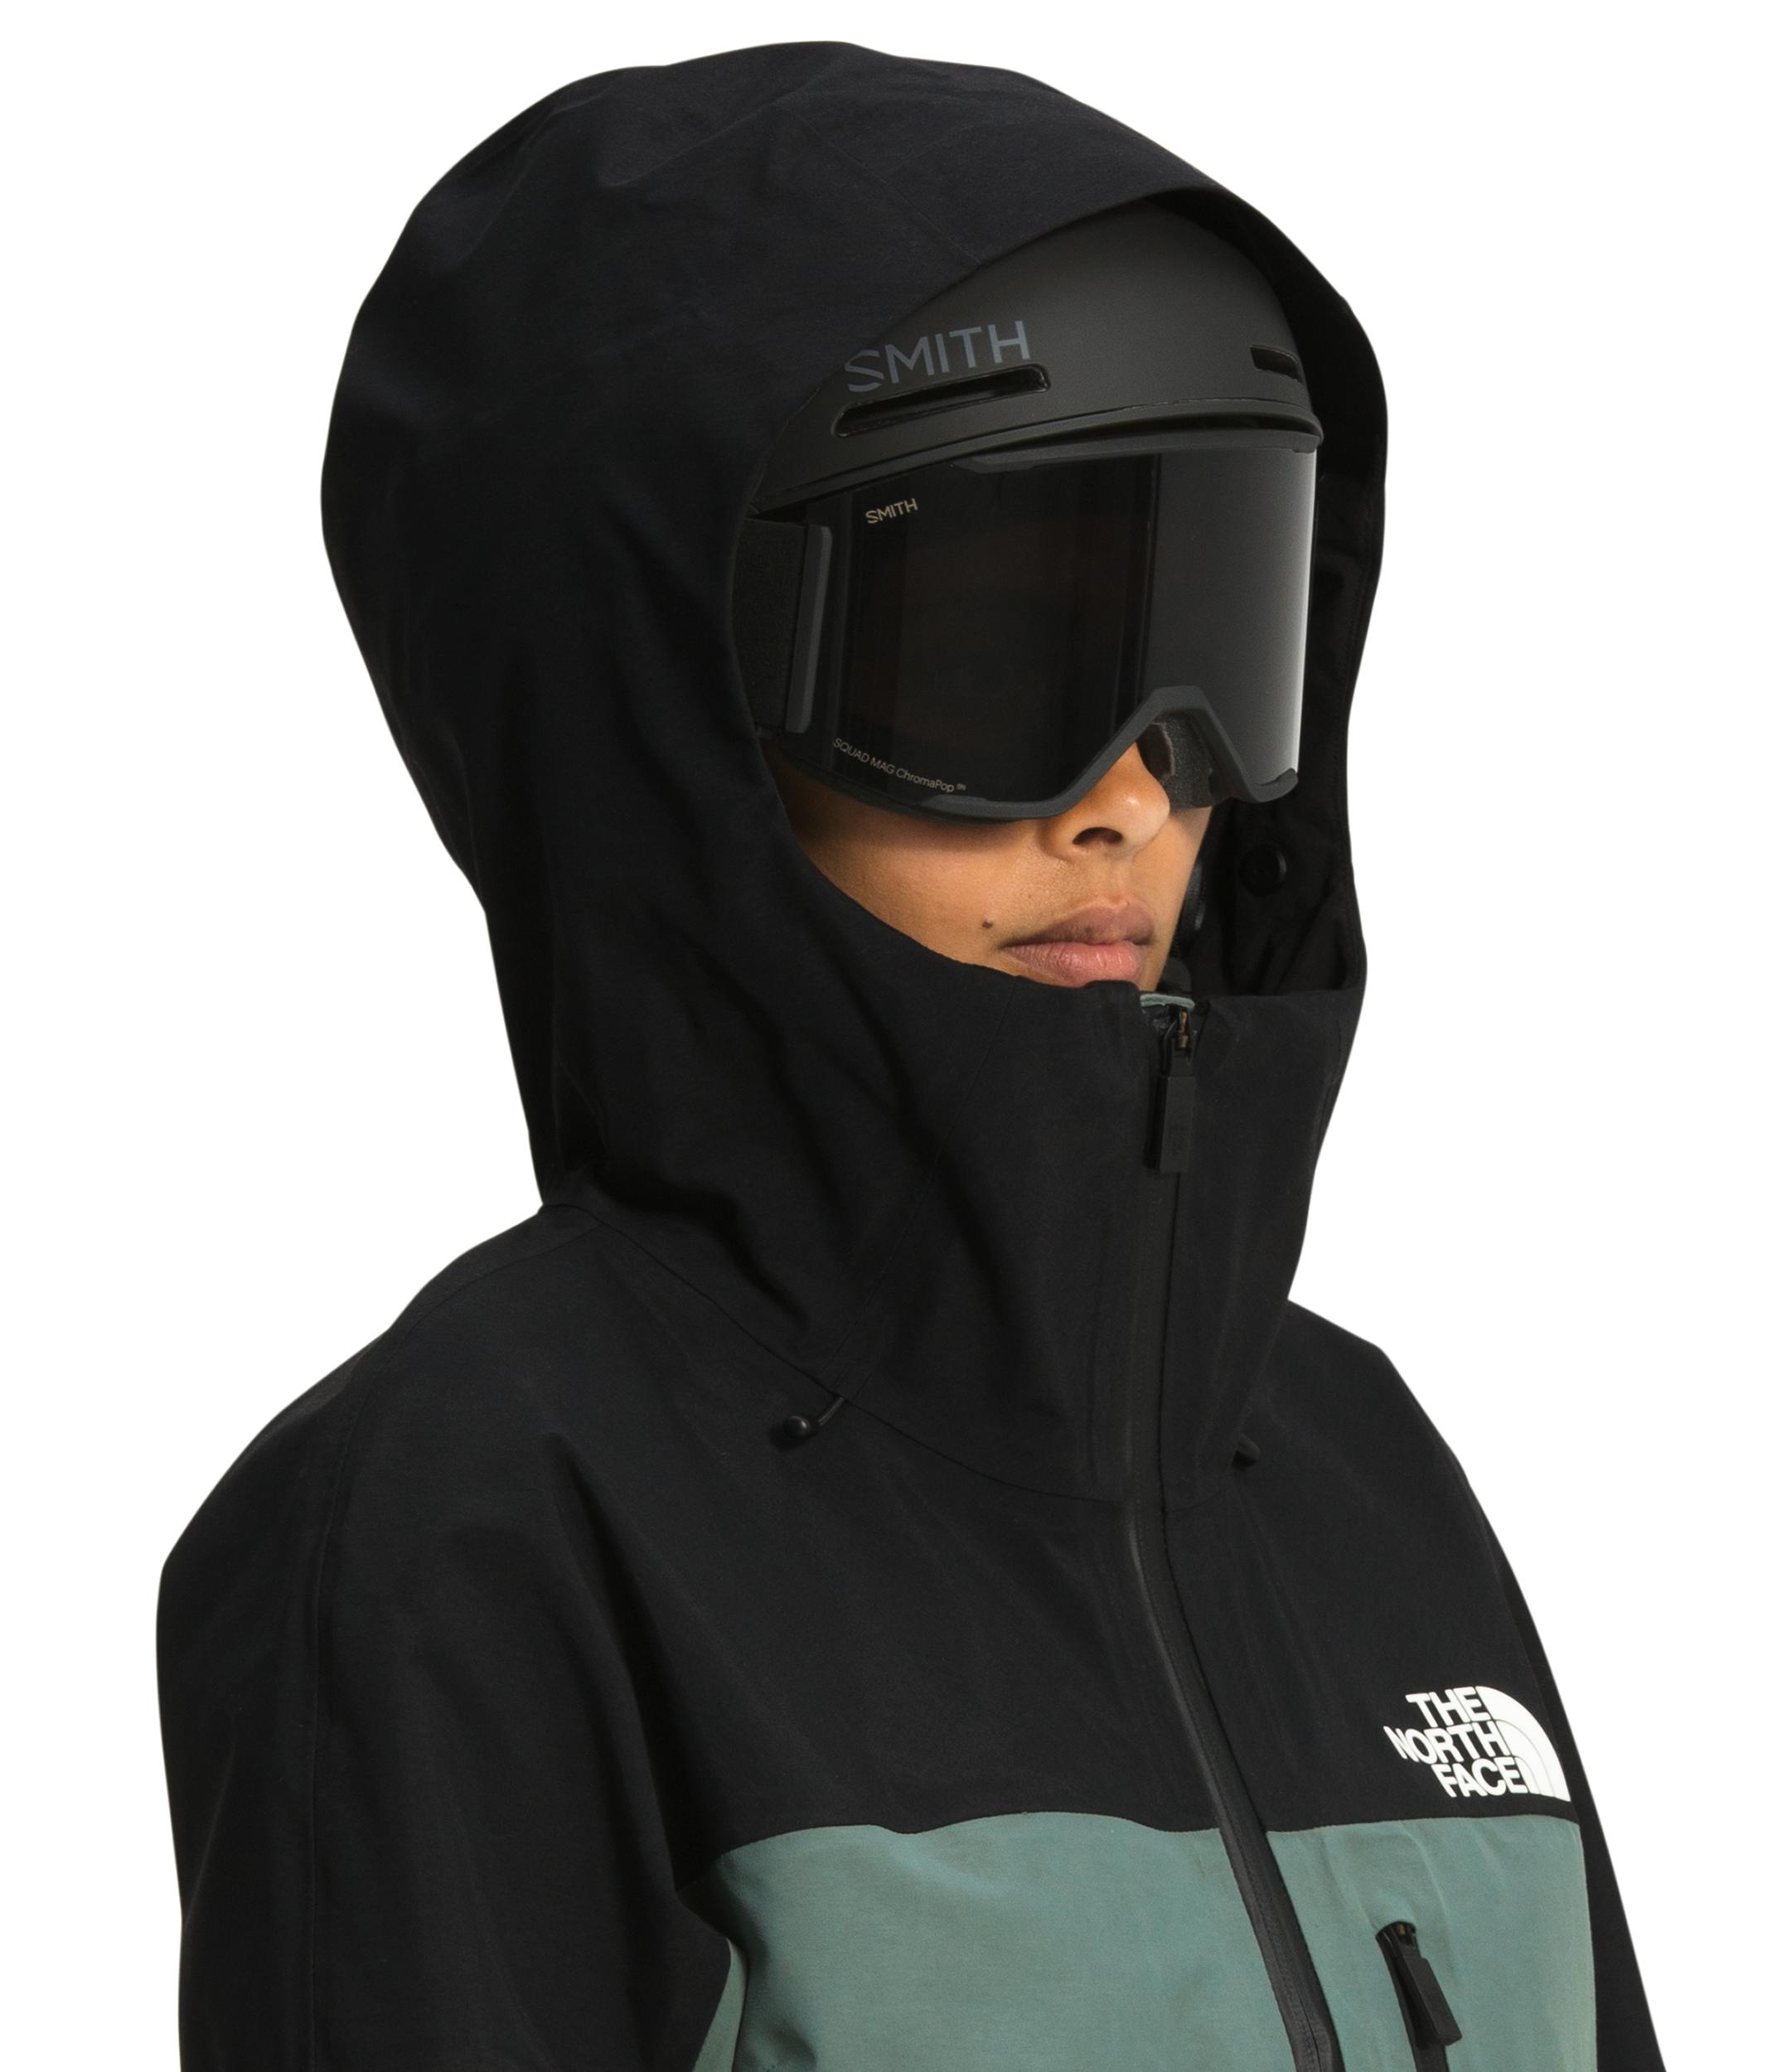 The North Face Women's Powderflo FUTURELIGHT Shell Jacket